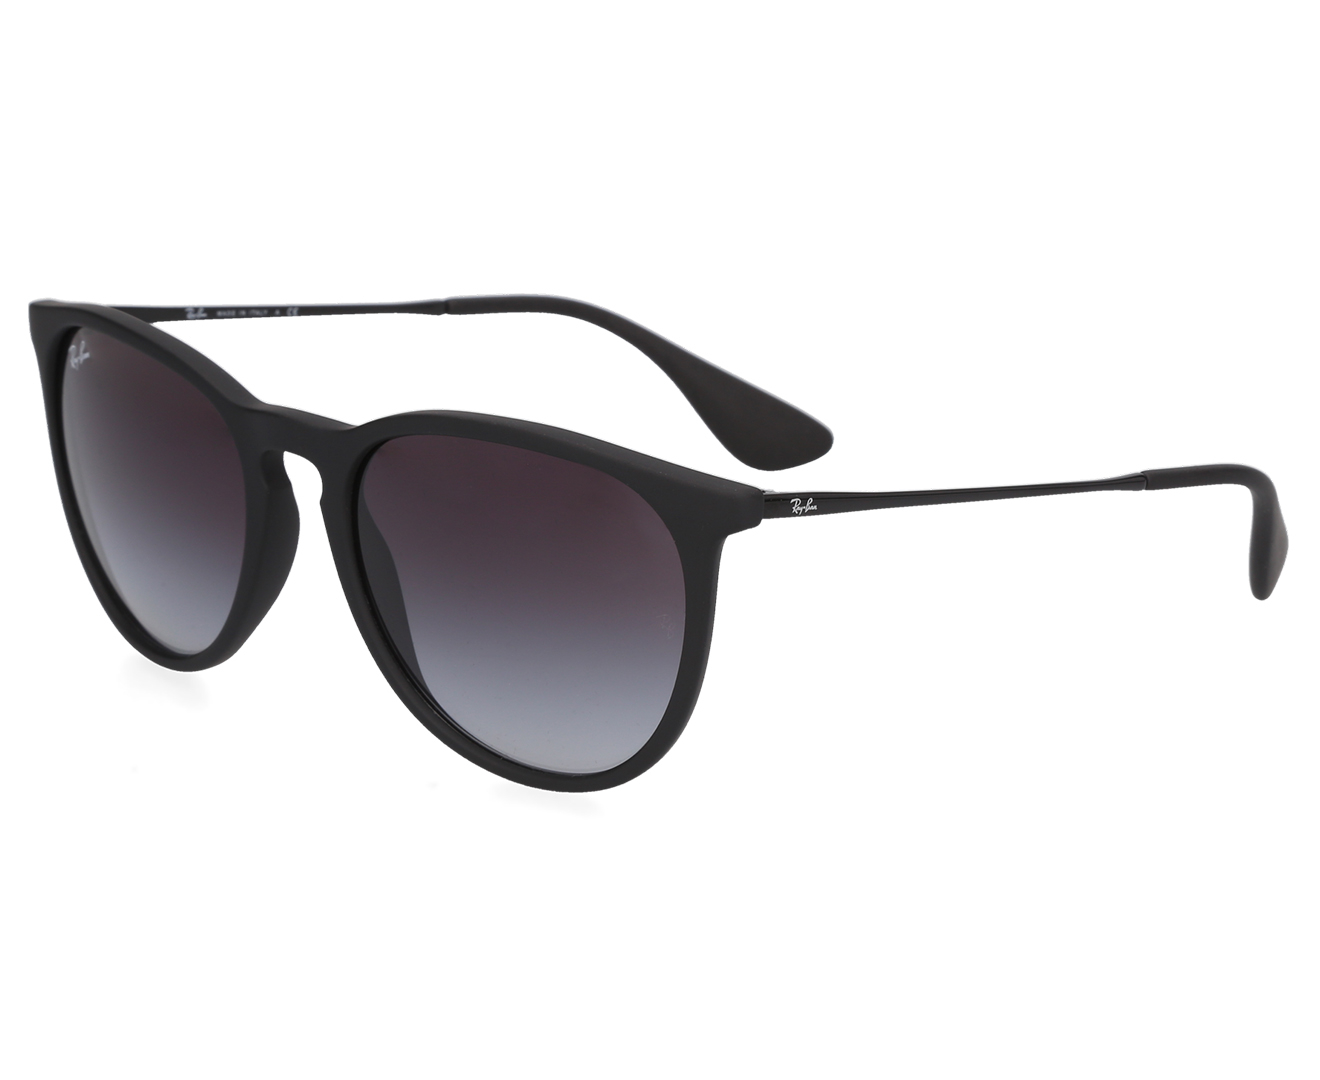 Ray-Ban Erika Classic RB4171 Sunglasses - Black/Grey | Catch.com.au